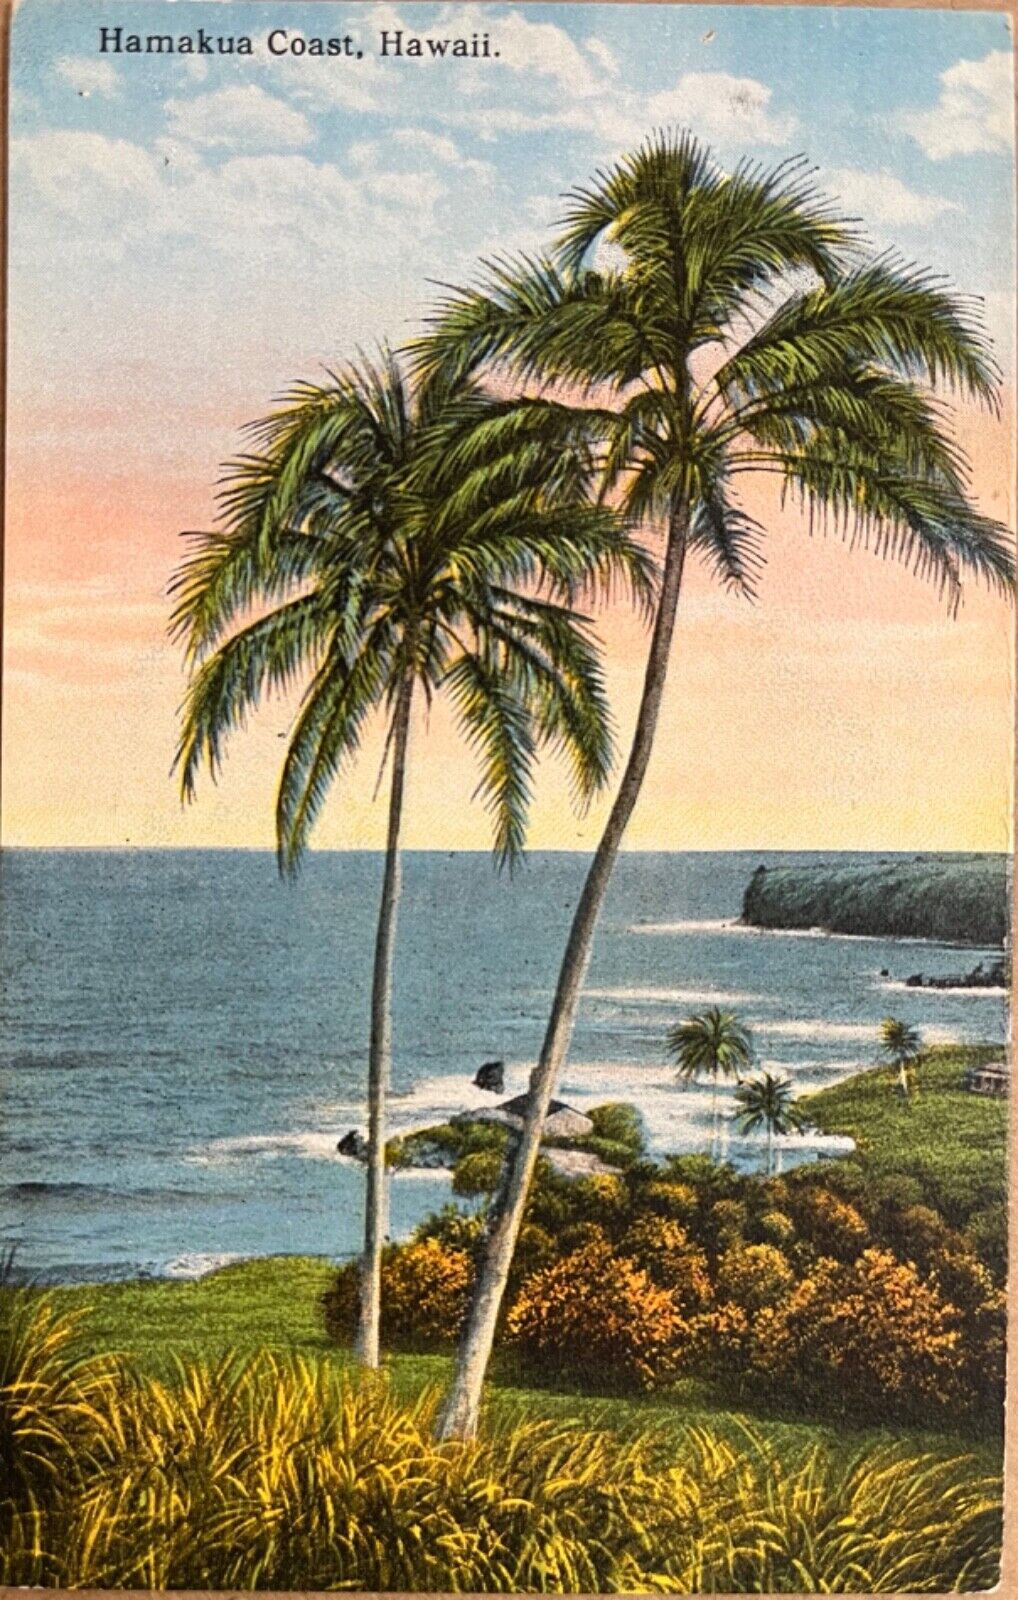 Hawaii Hamakua Coast Ocean View Palm Tree Scenic Antique Postcard